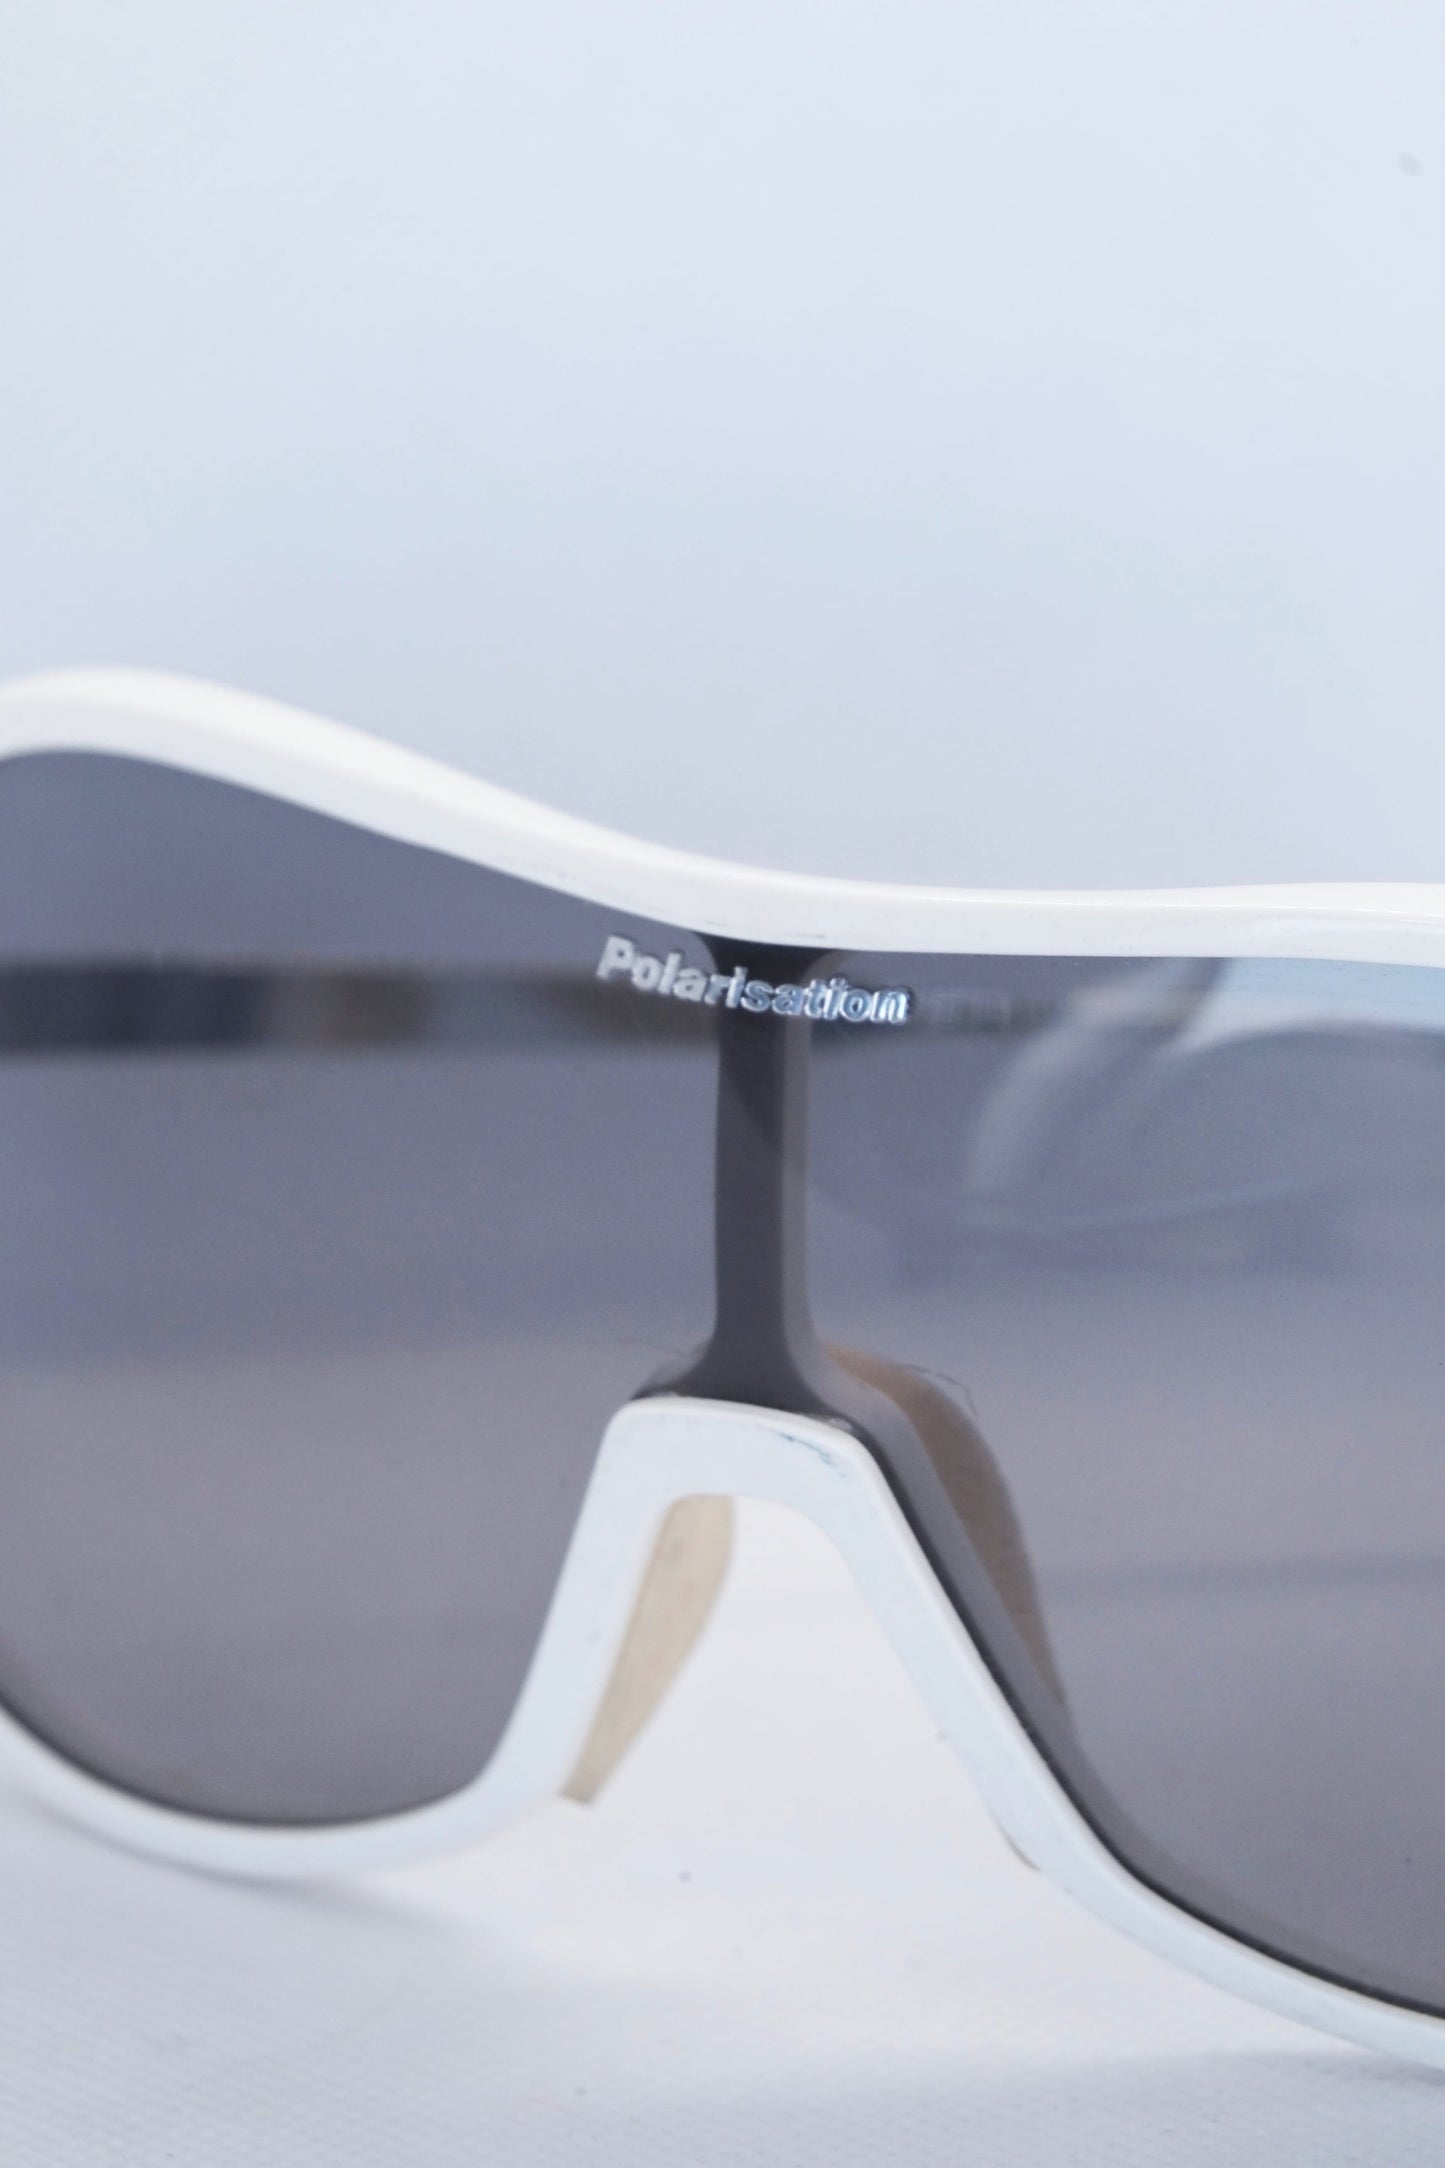 Close up of polarized lens of white sporteam vintage frames on white background